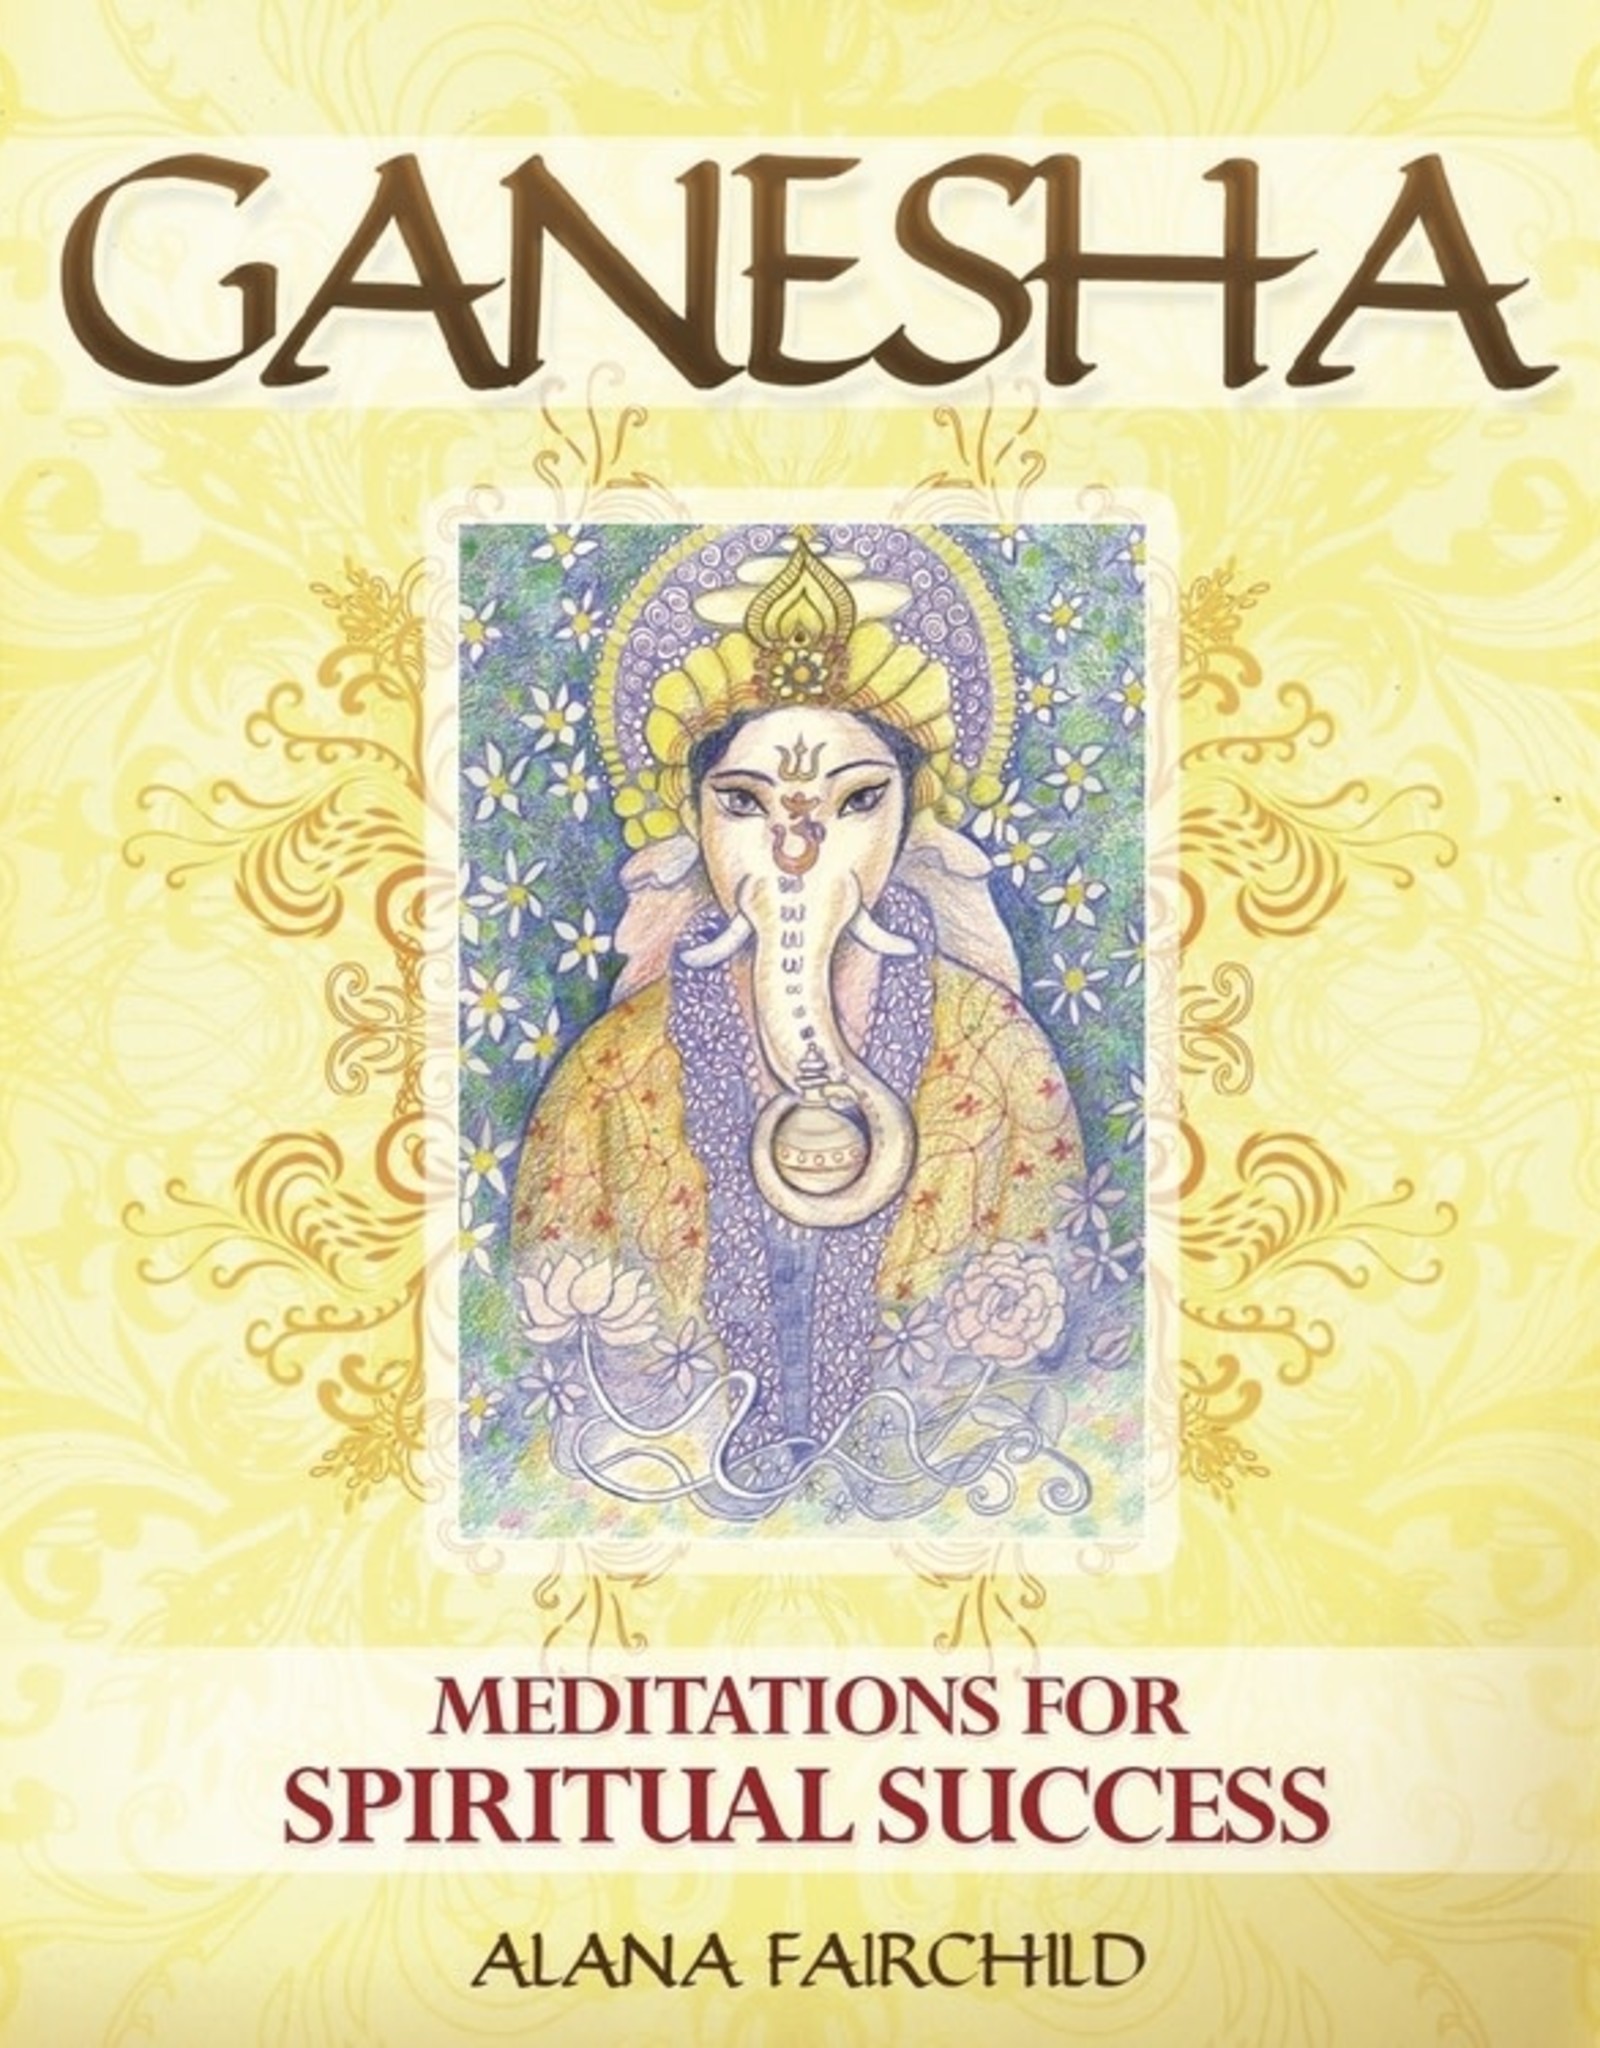 Ganesha Meditation CD